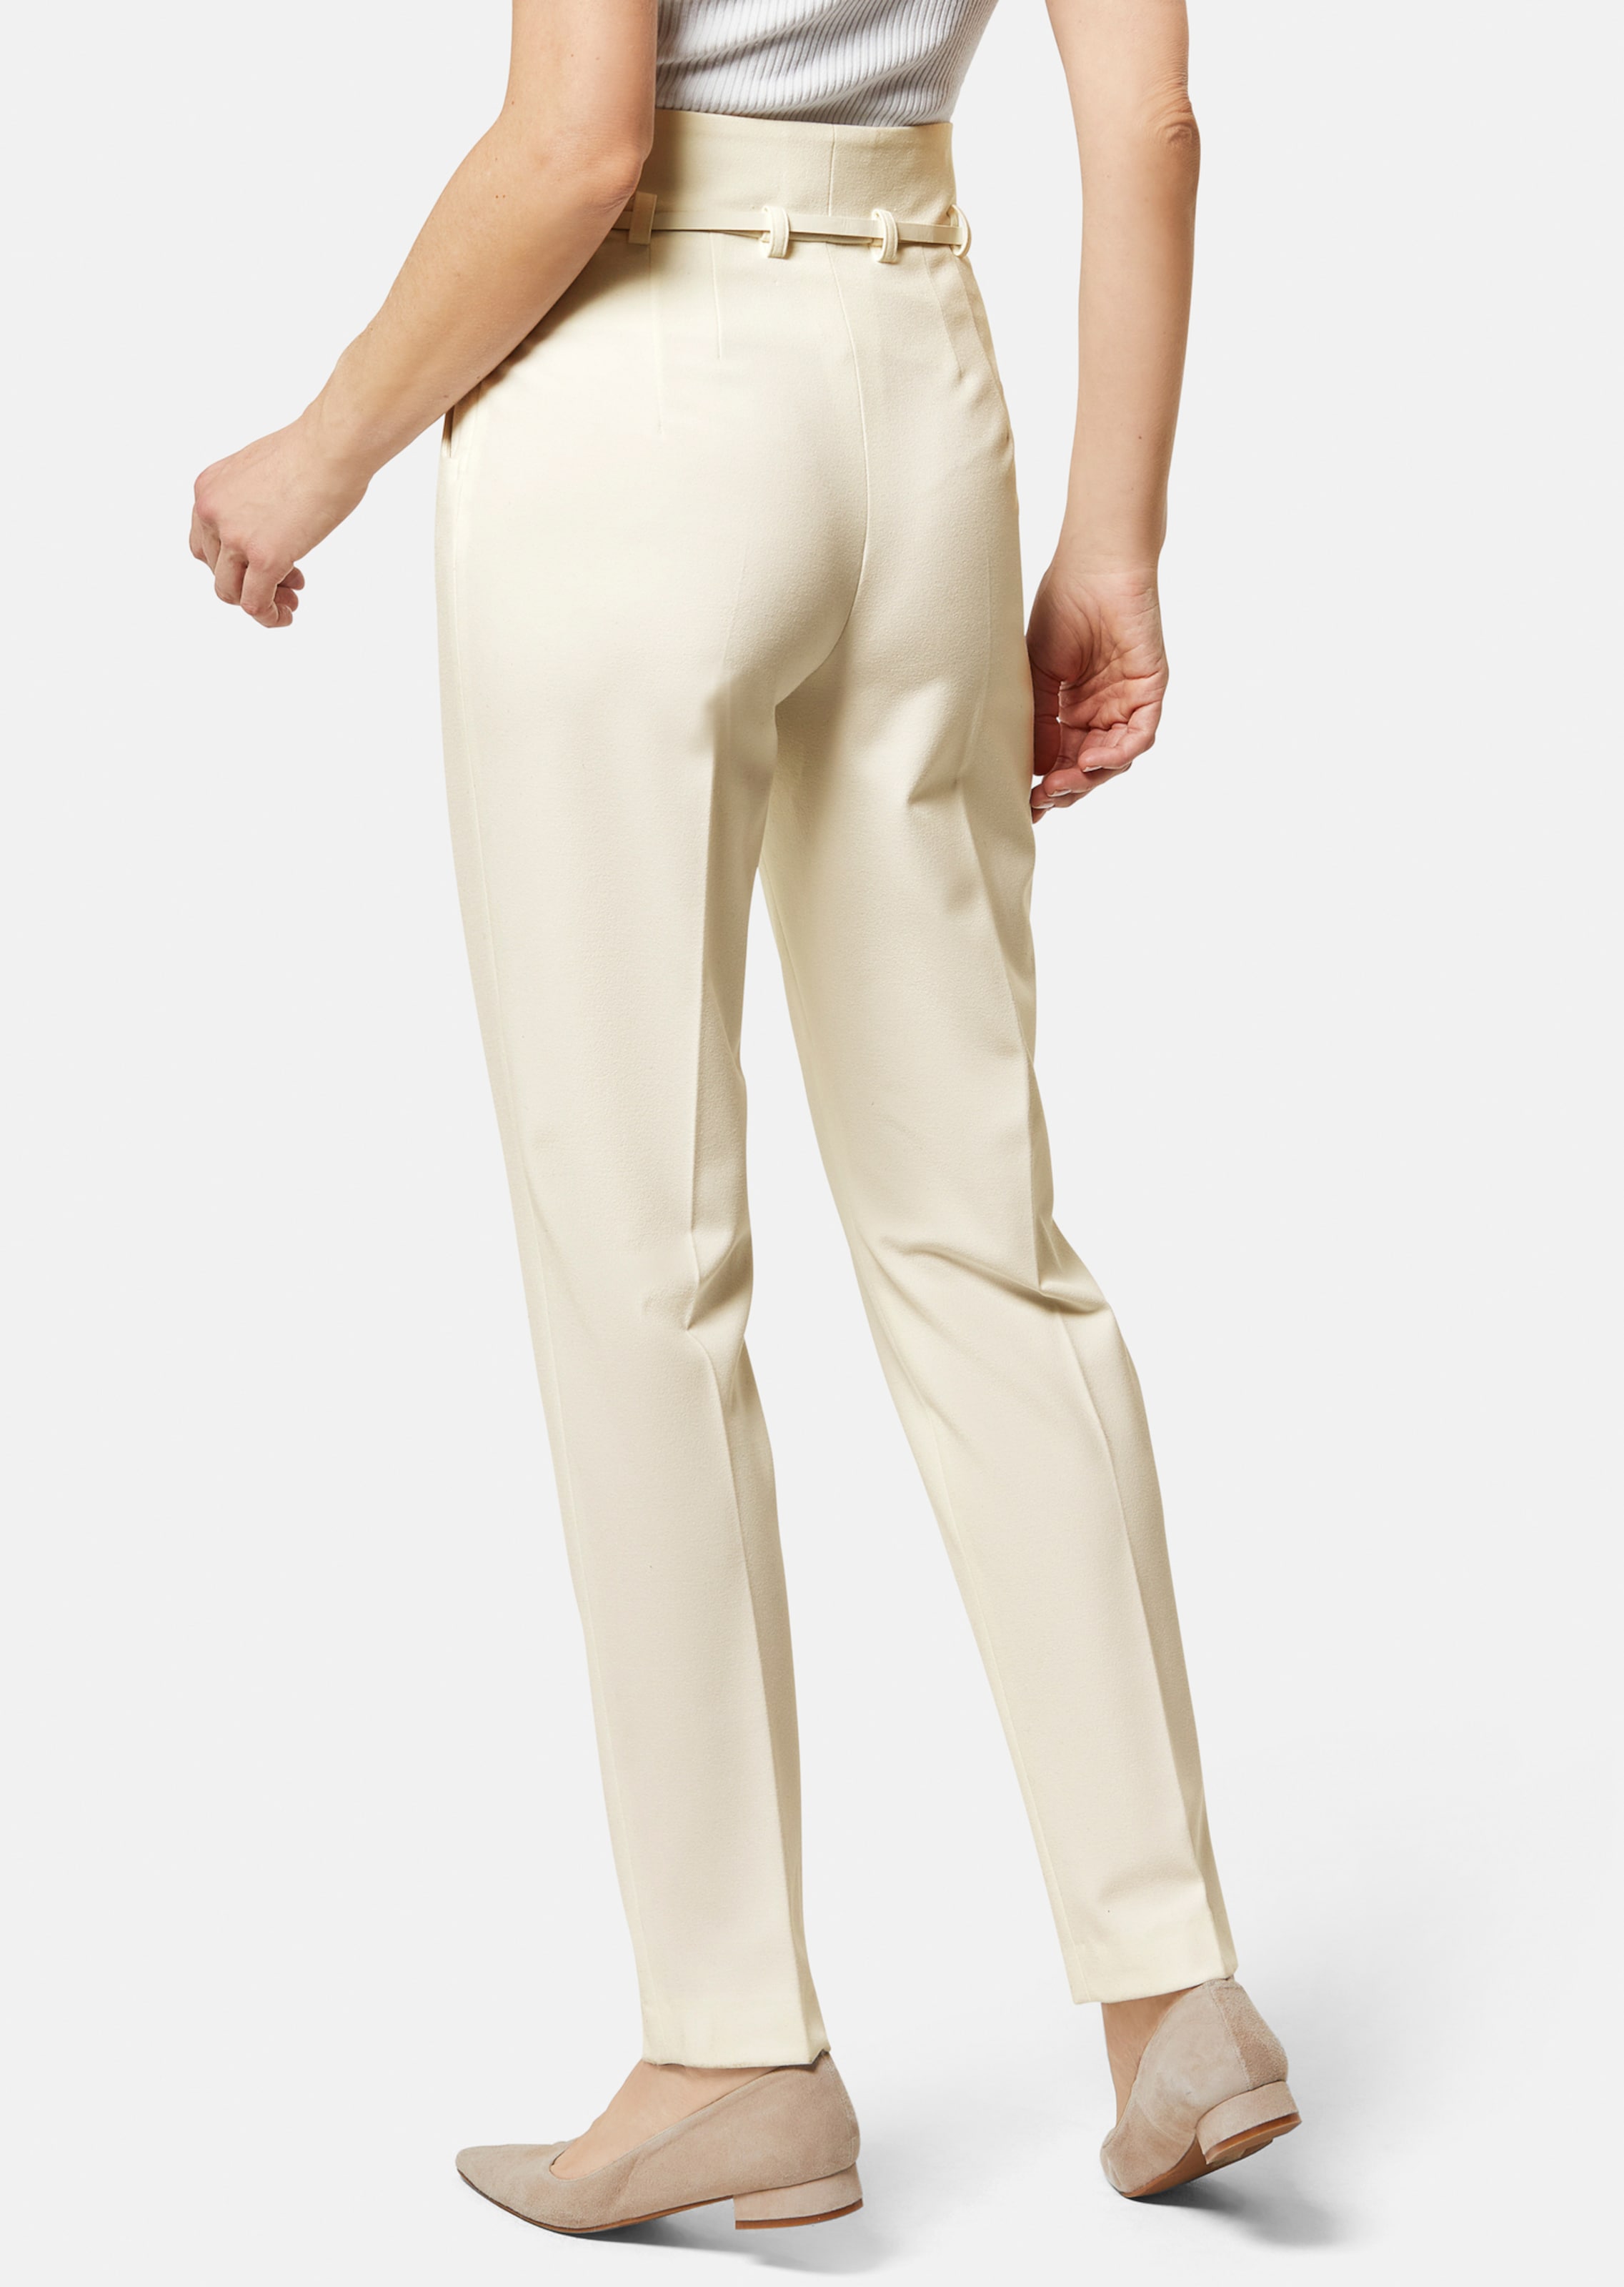 Pantalon grande taille confortable femme ronde - Caprices de madeleine